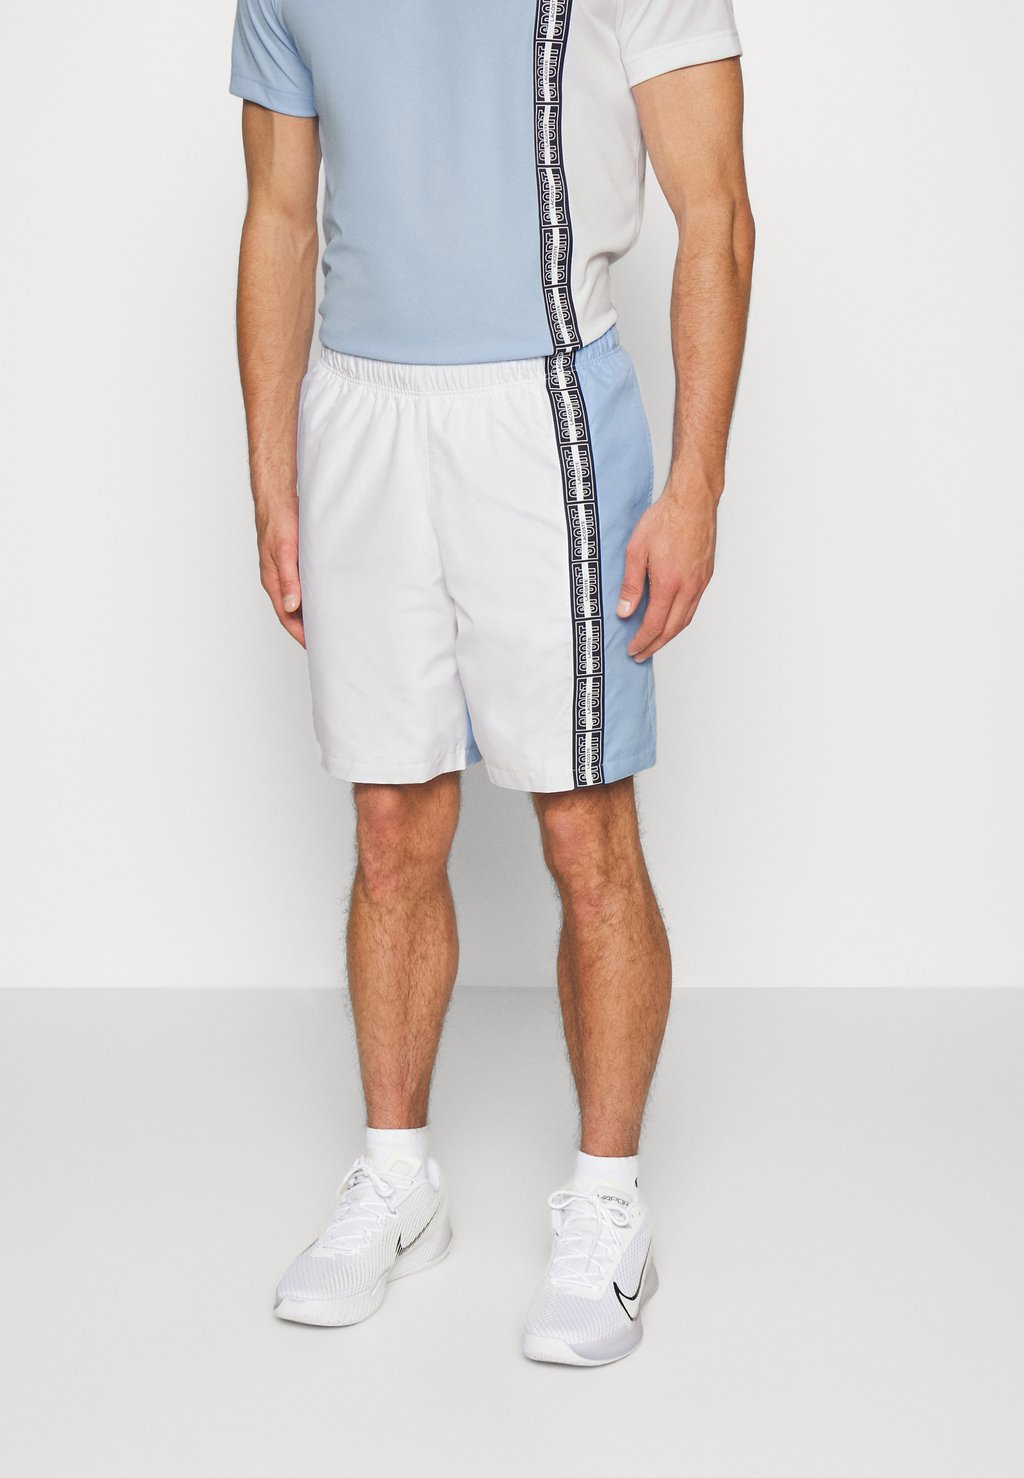 Спортивные шорты Tennis Lacoste, цвет white/navy blue спортивные шорты sports shorts lacoste цвет navy blue